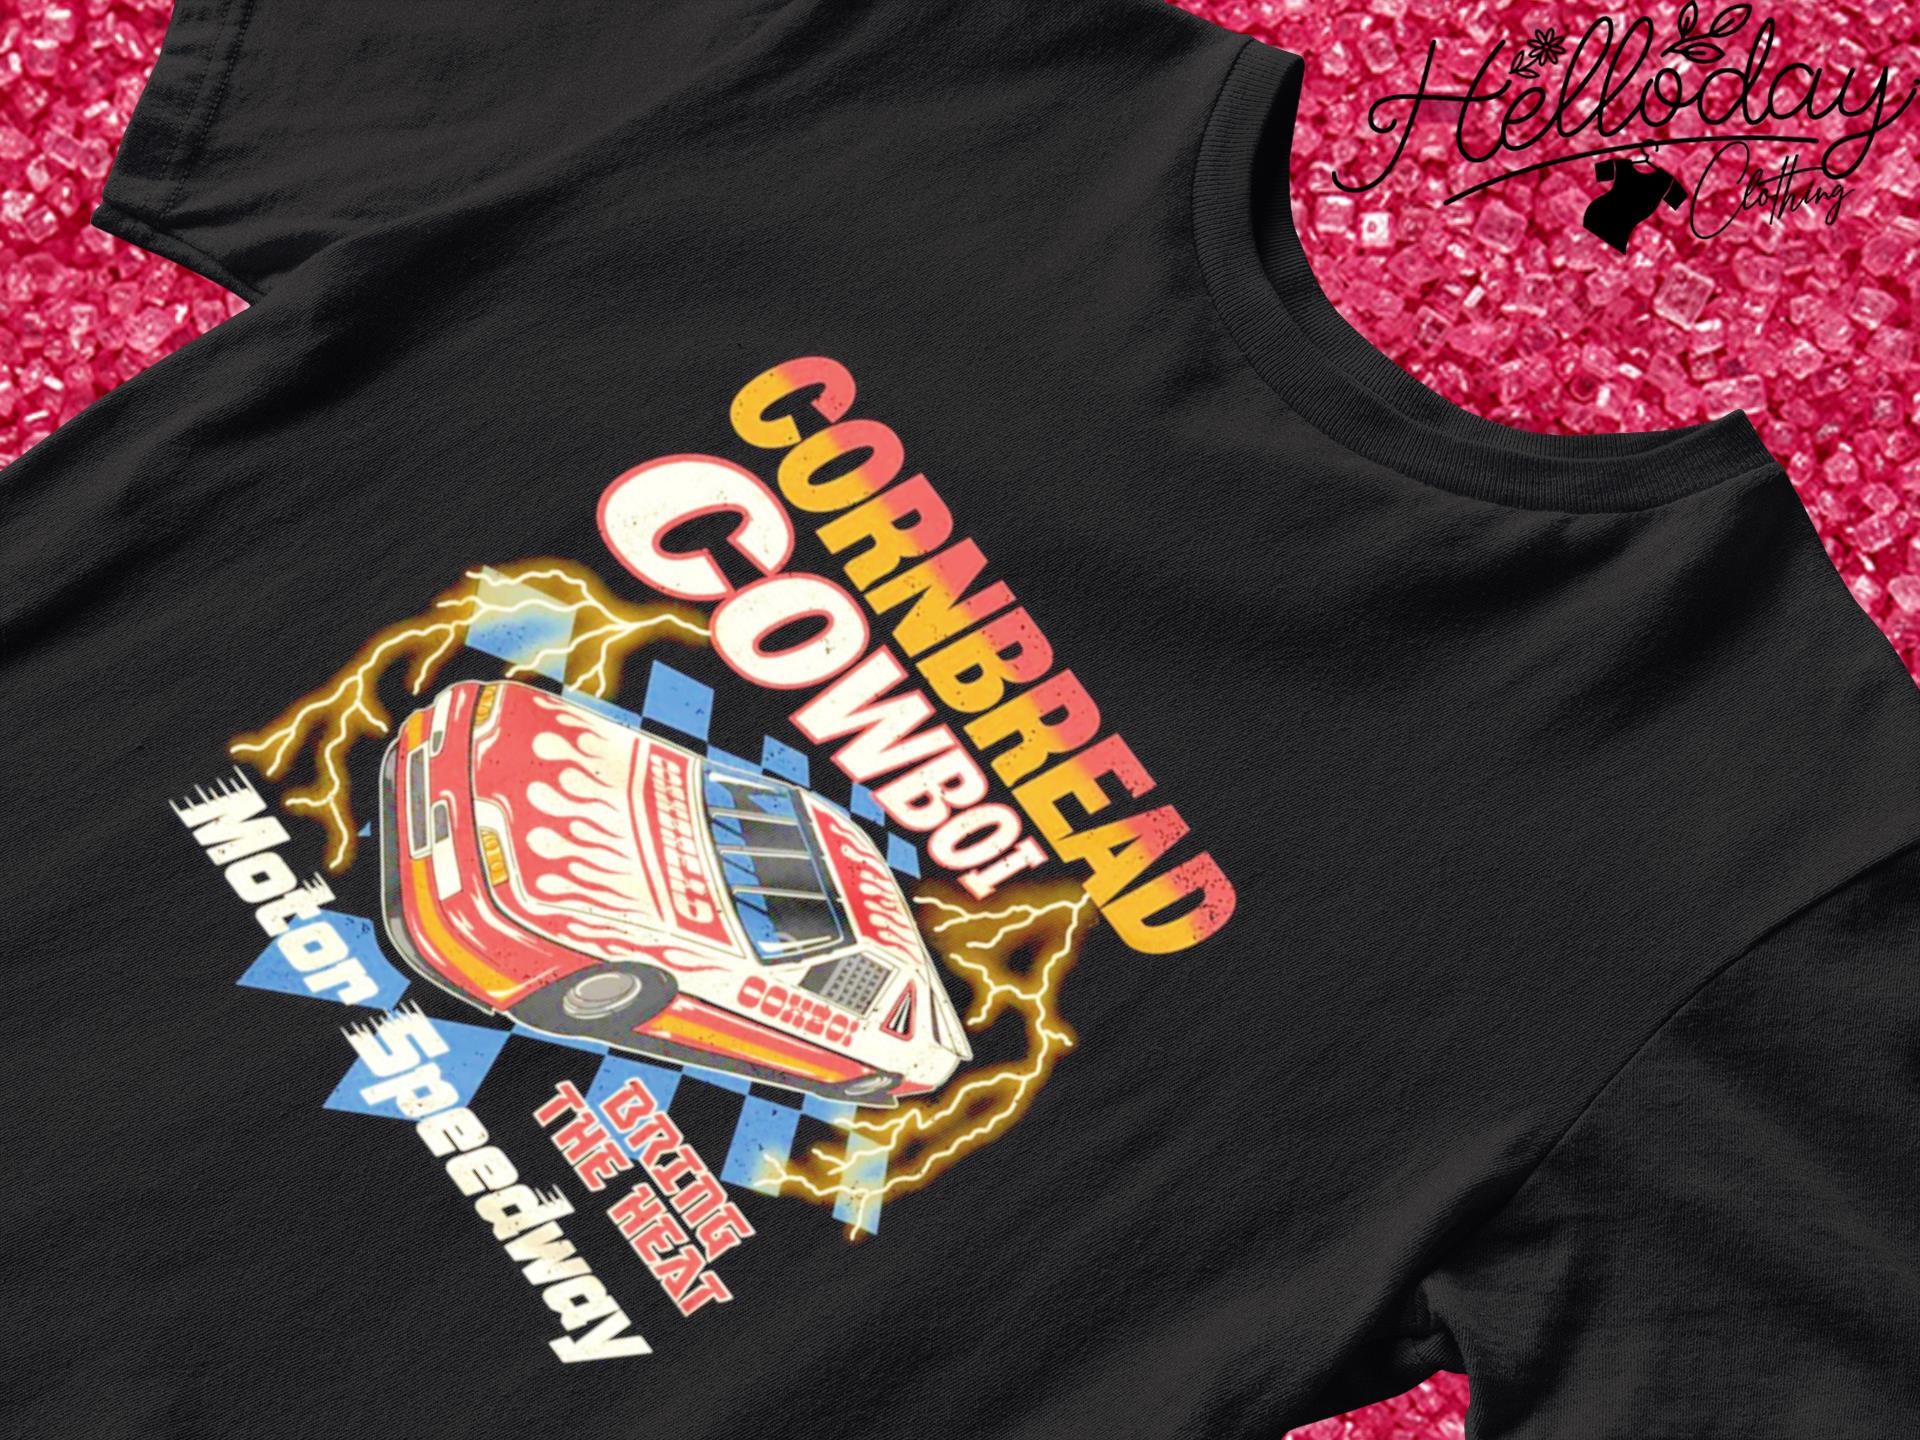 Cornbread cowboi racing motor speedway shirt